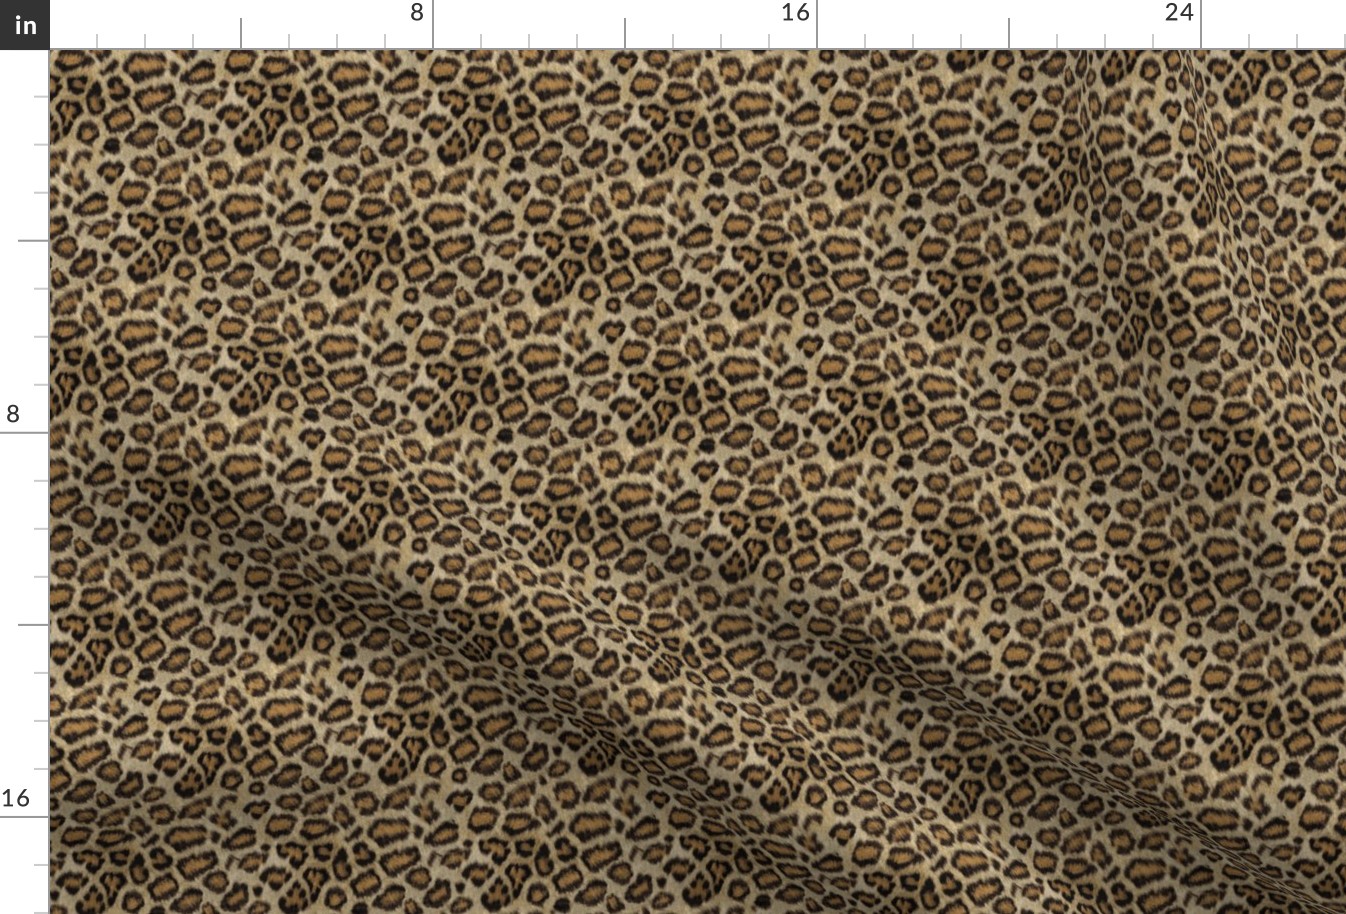 Leopard Small Scale